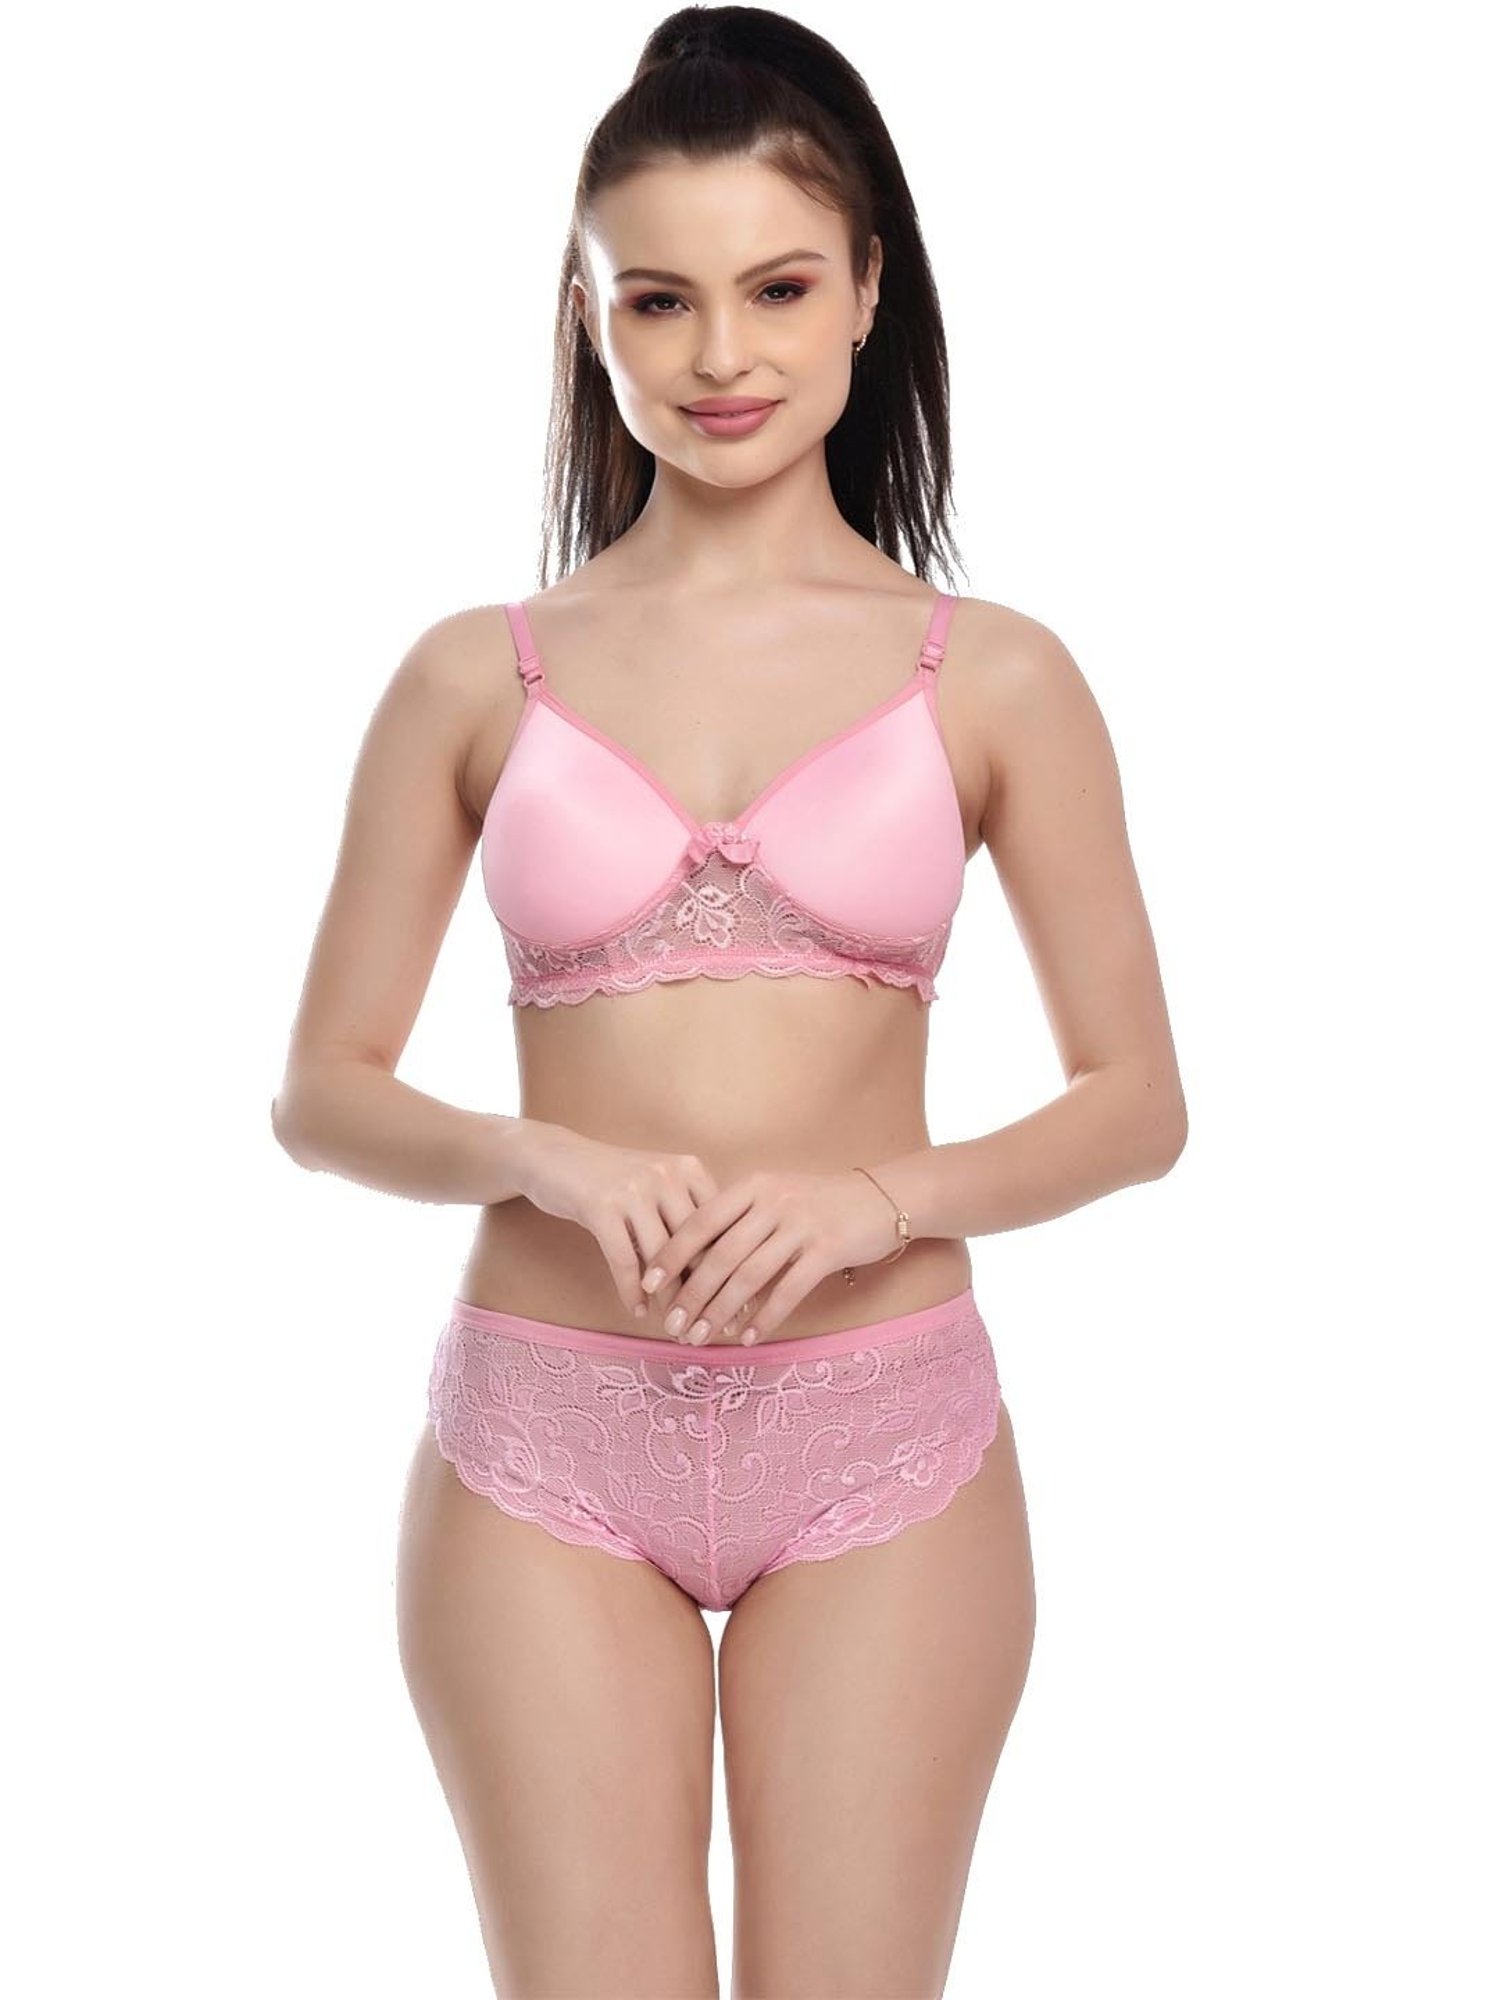 Lacework Push Up Bra - Buy Pink Lace Bra Online India